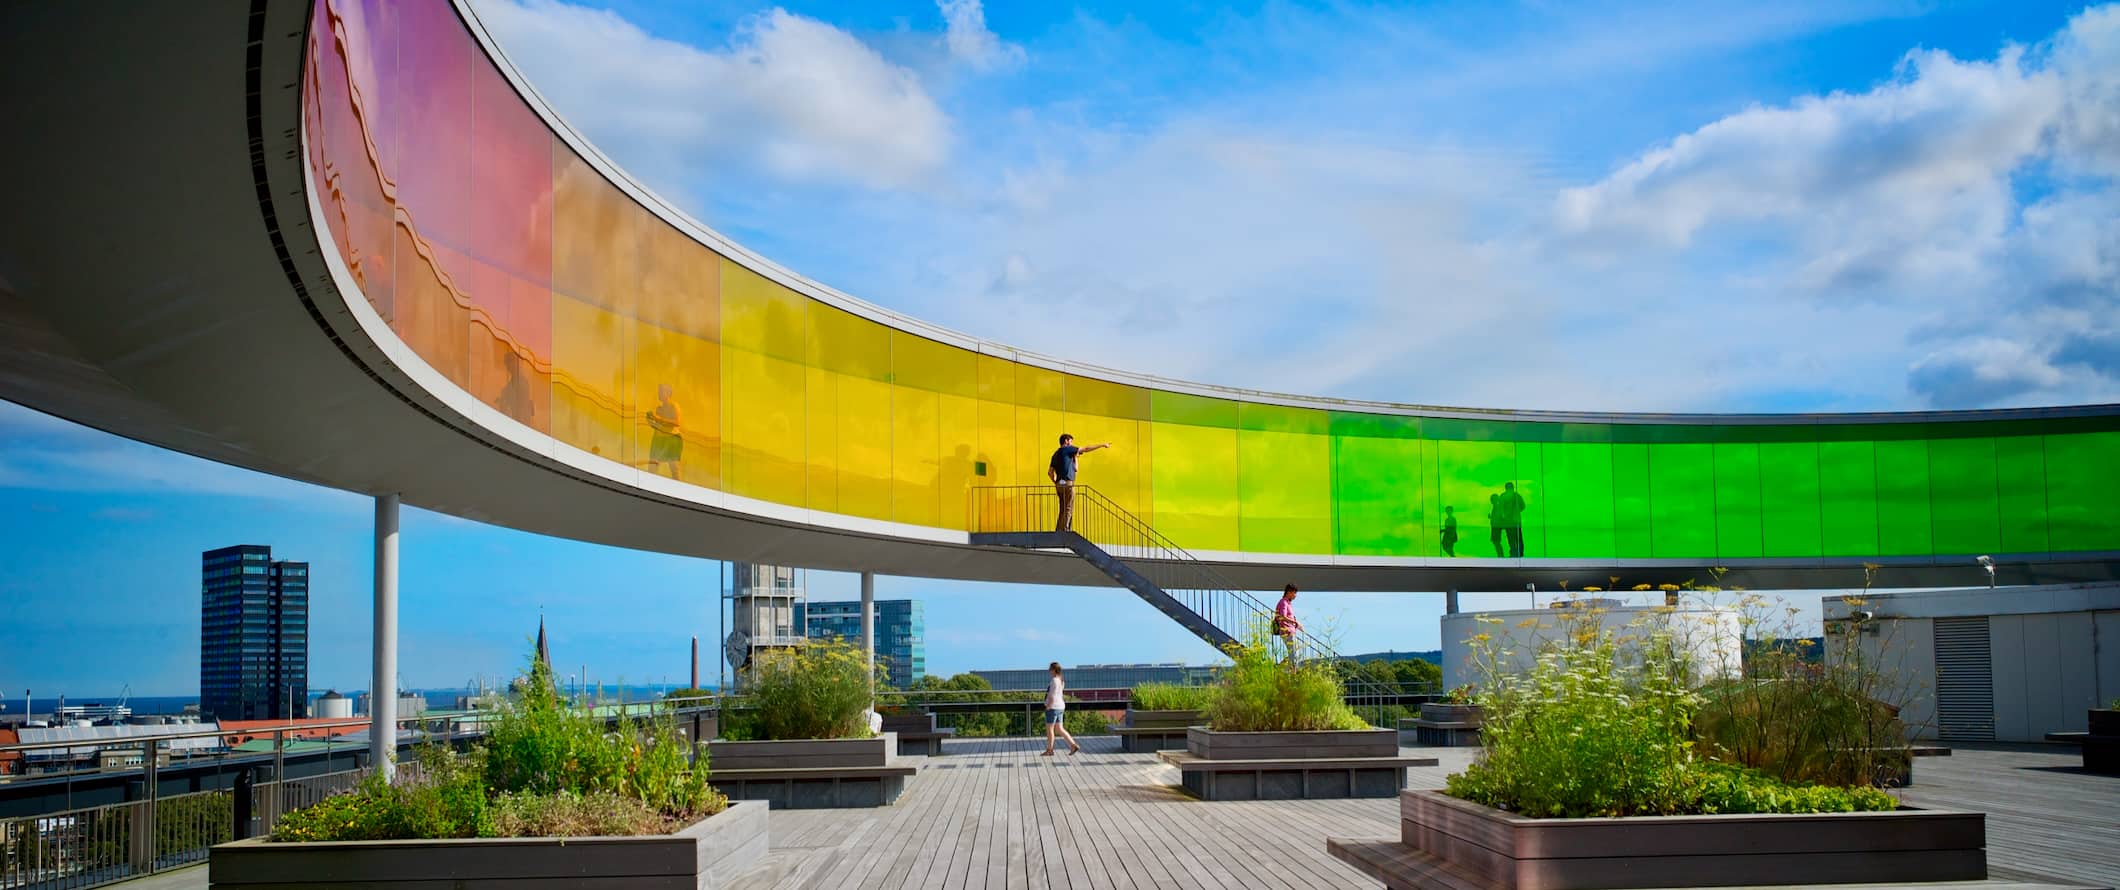 Colorful panoramic artwork in the city of Aarhus, Denmark at the Art Museum